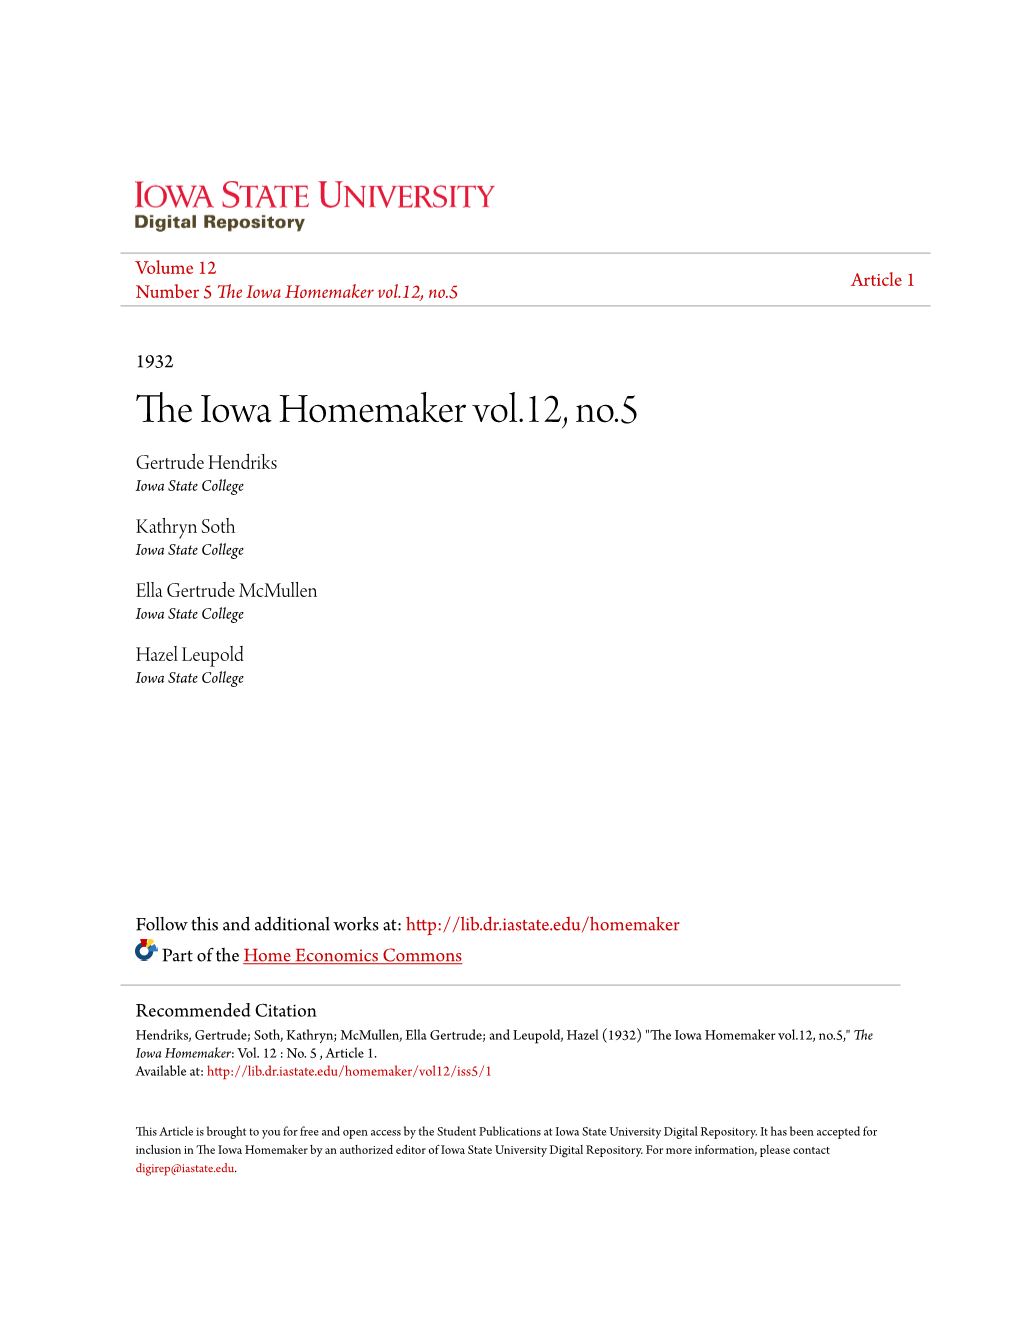 The Iowa Homemaker Vol.12, No.5